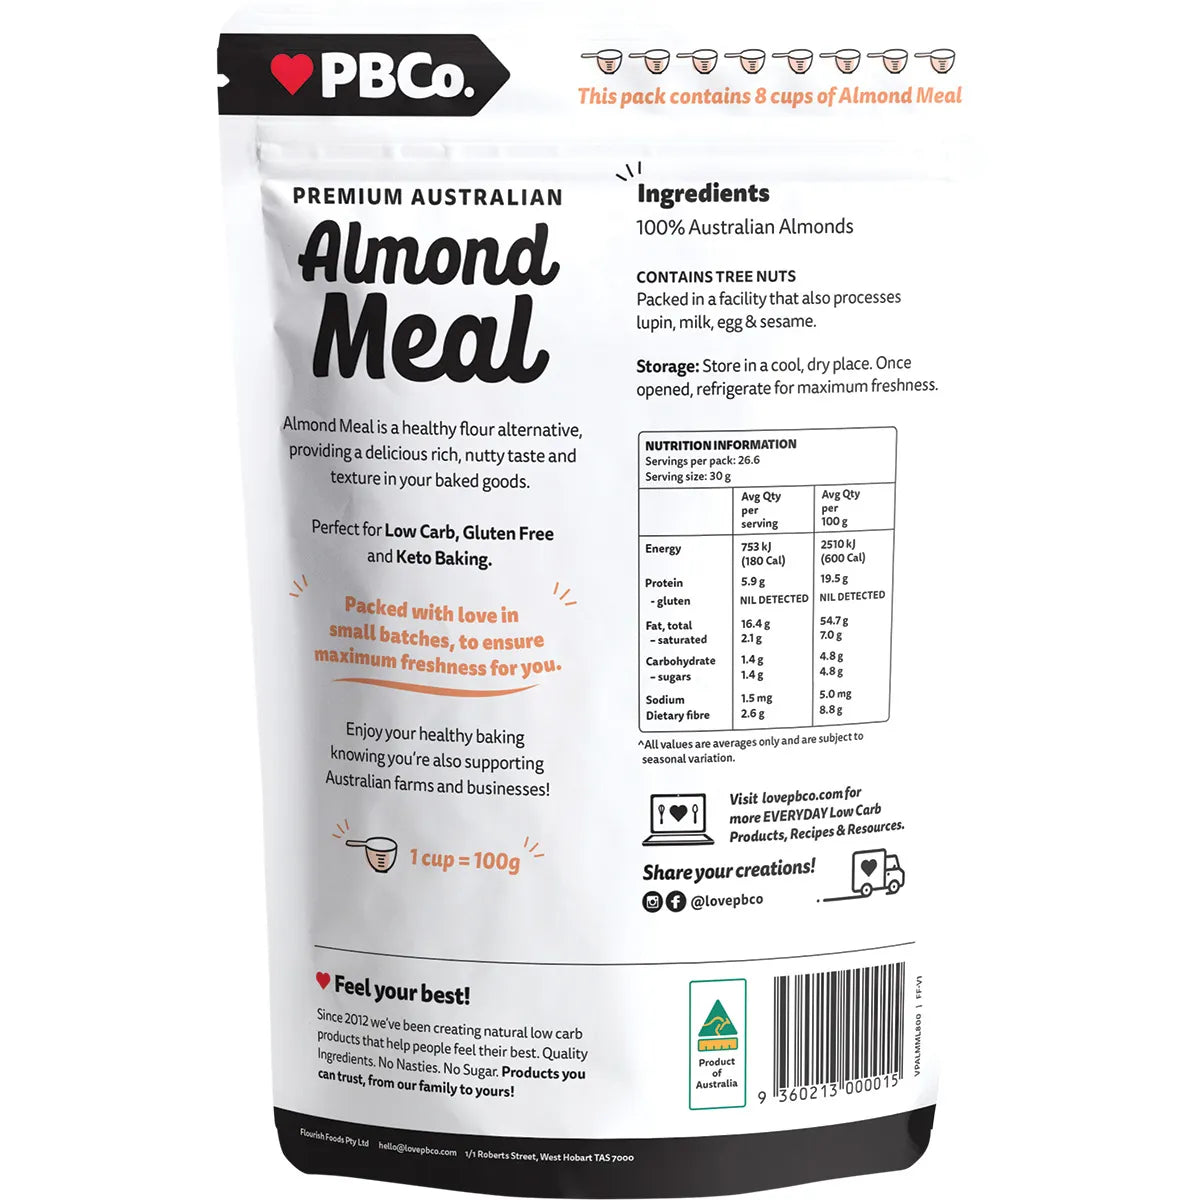 PBCO Premium Australian Almond Meal 800g